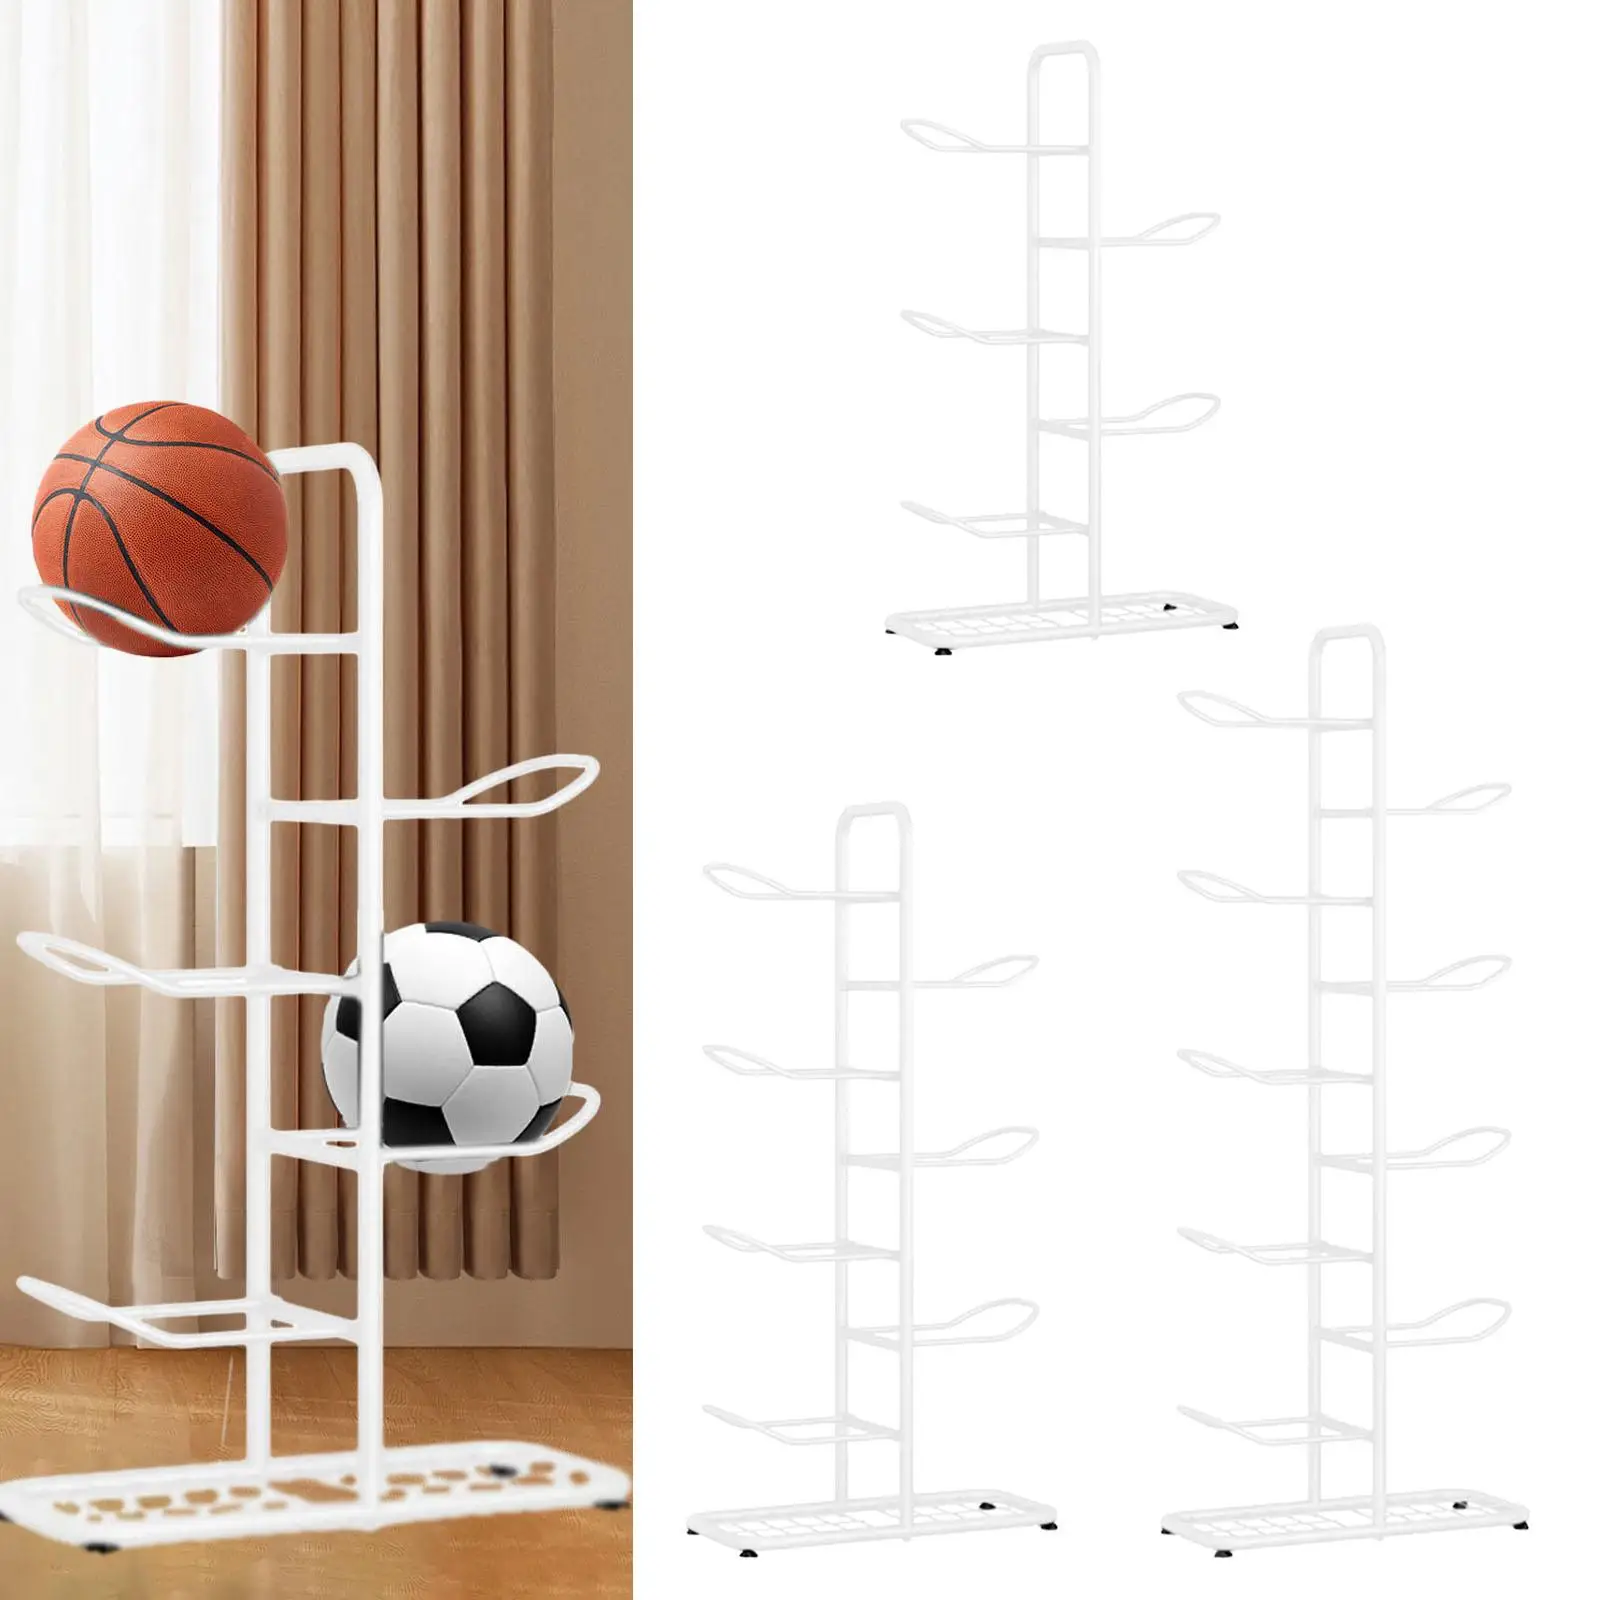 Sports Equipment Storage Organizer Vertical Iron Ball Storage Holder for Football Rackets Soccer Tennis Rackets Sports Gear